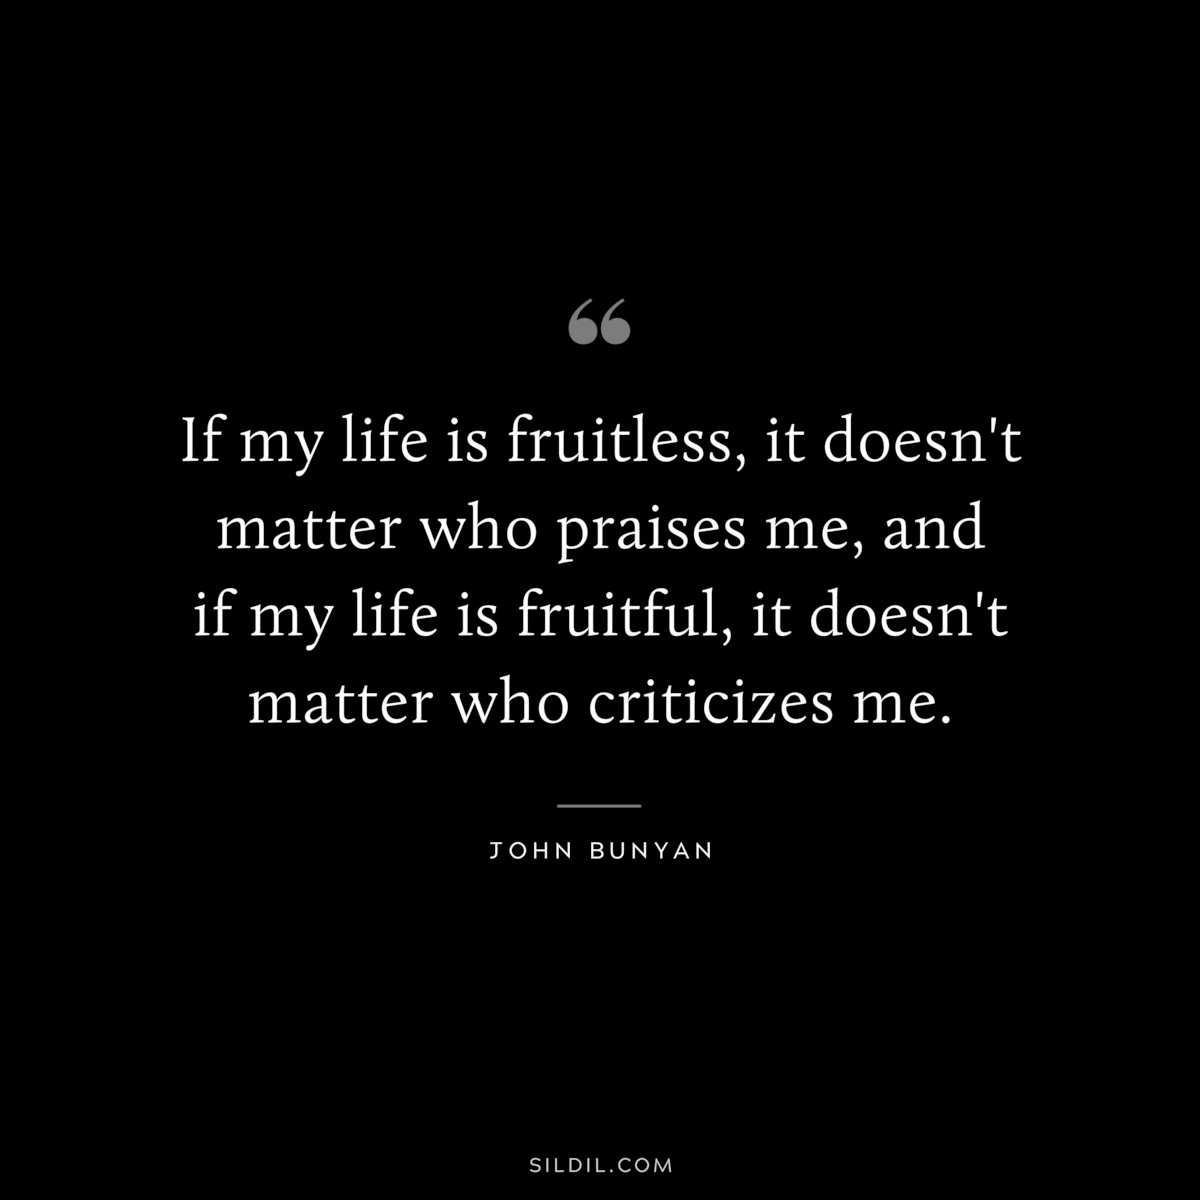 If my life is fruitless, it doesn't matter who praises me, and if my life is fruitful, it doesn't matter who criticizes me. ― John Bunyan